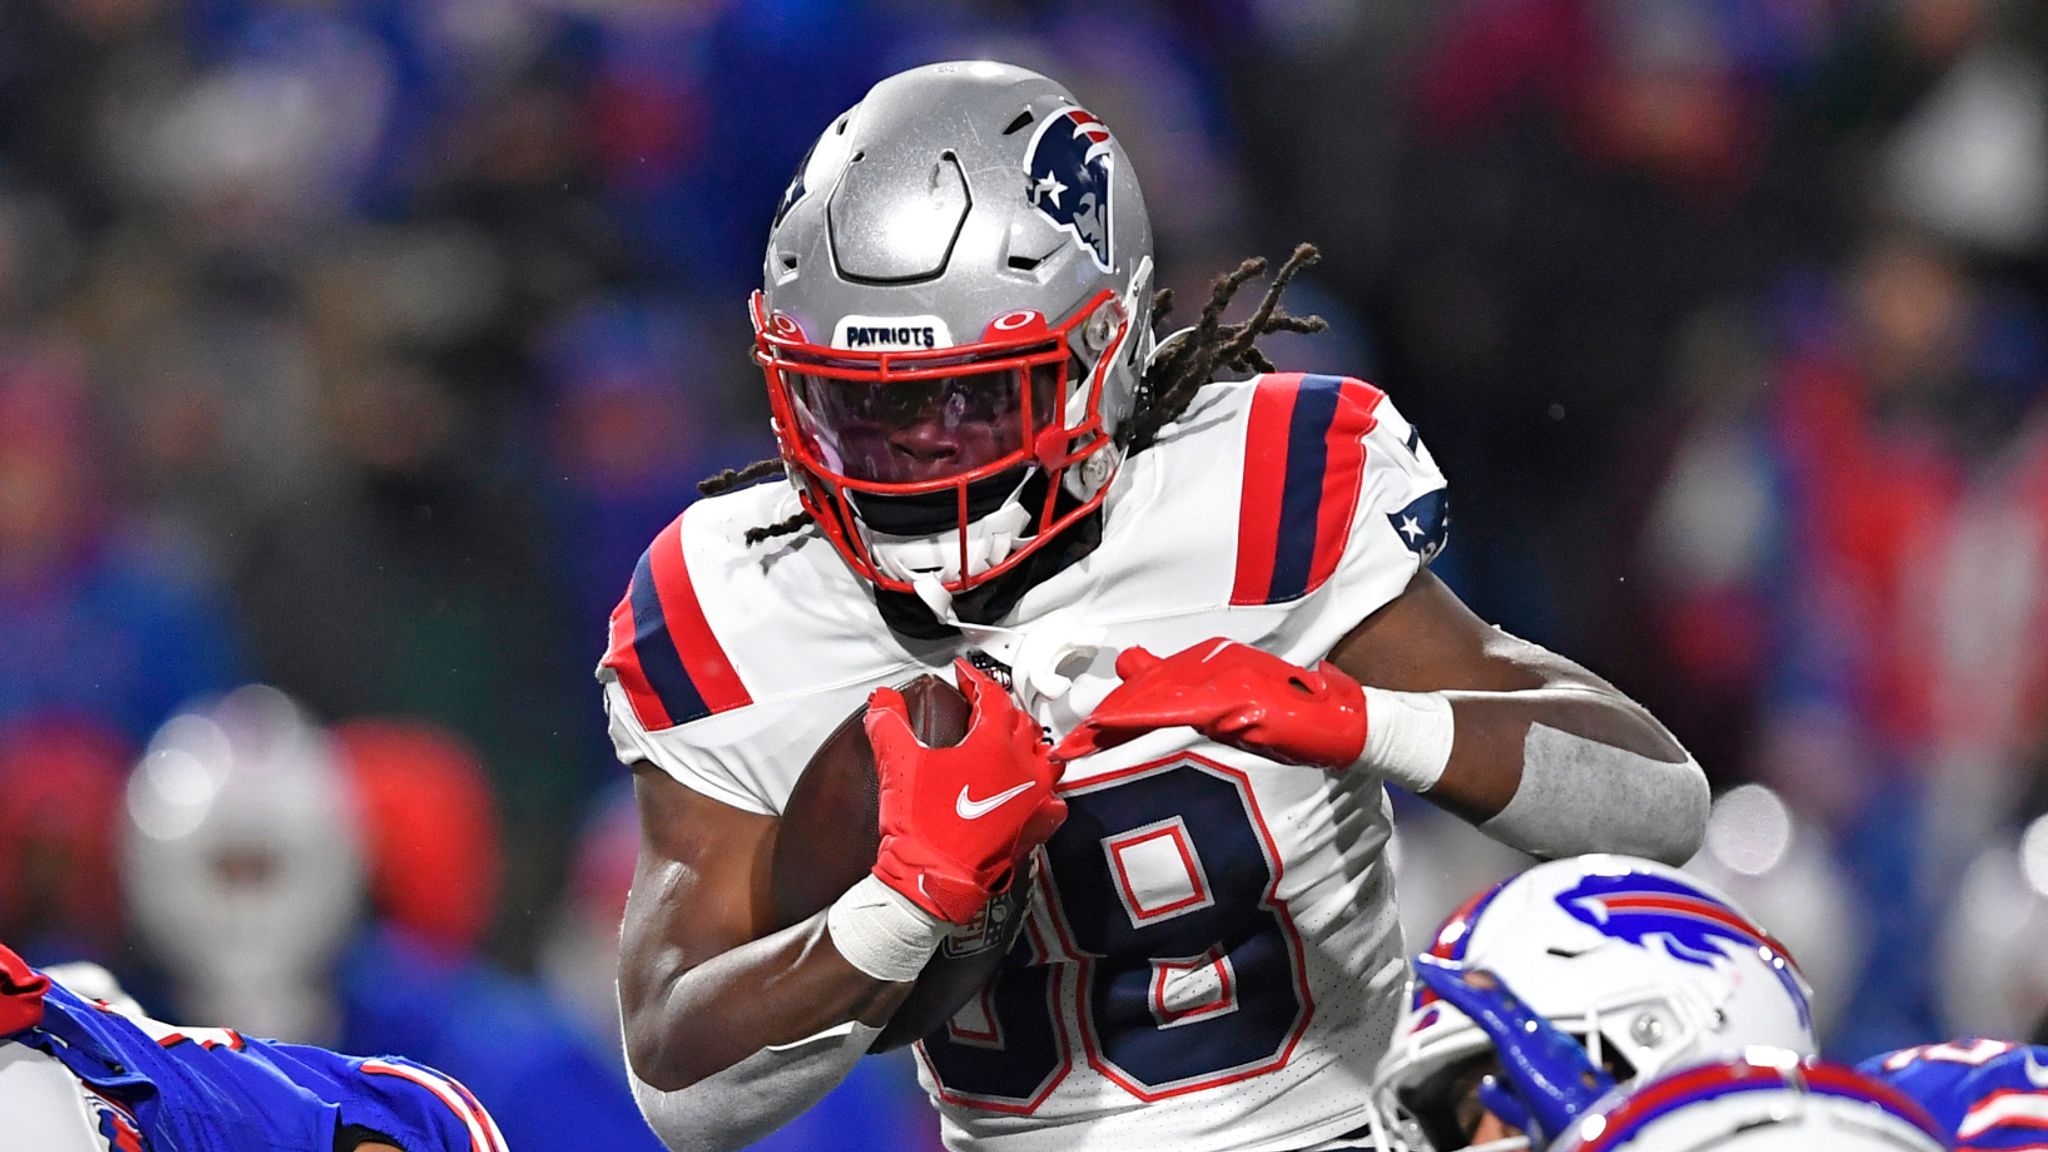 New England Patriots 14-10 Buffalo Bills: Mac Jones attempts just three passes as beat Bills in tough conditions News | Sports